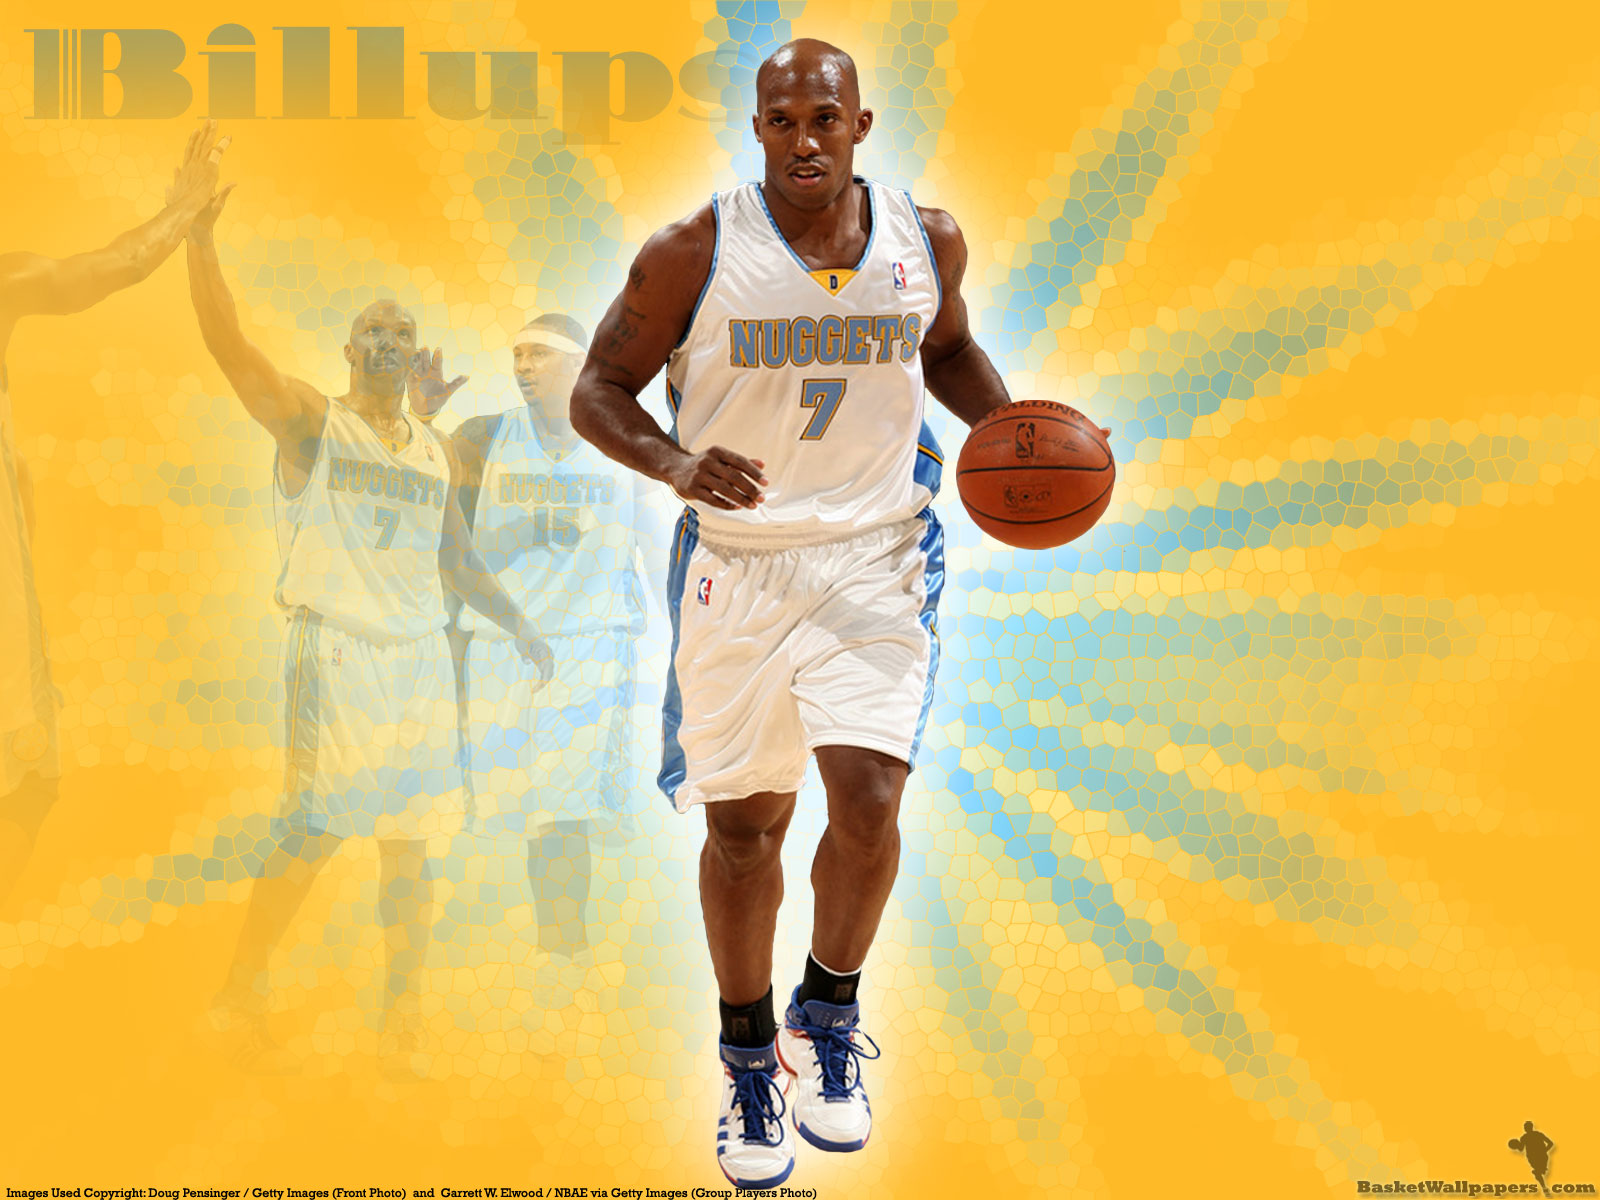 CHAUNCEY BILLUPS Nuggets Wallpaper - Basketball Wallpapers